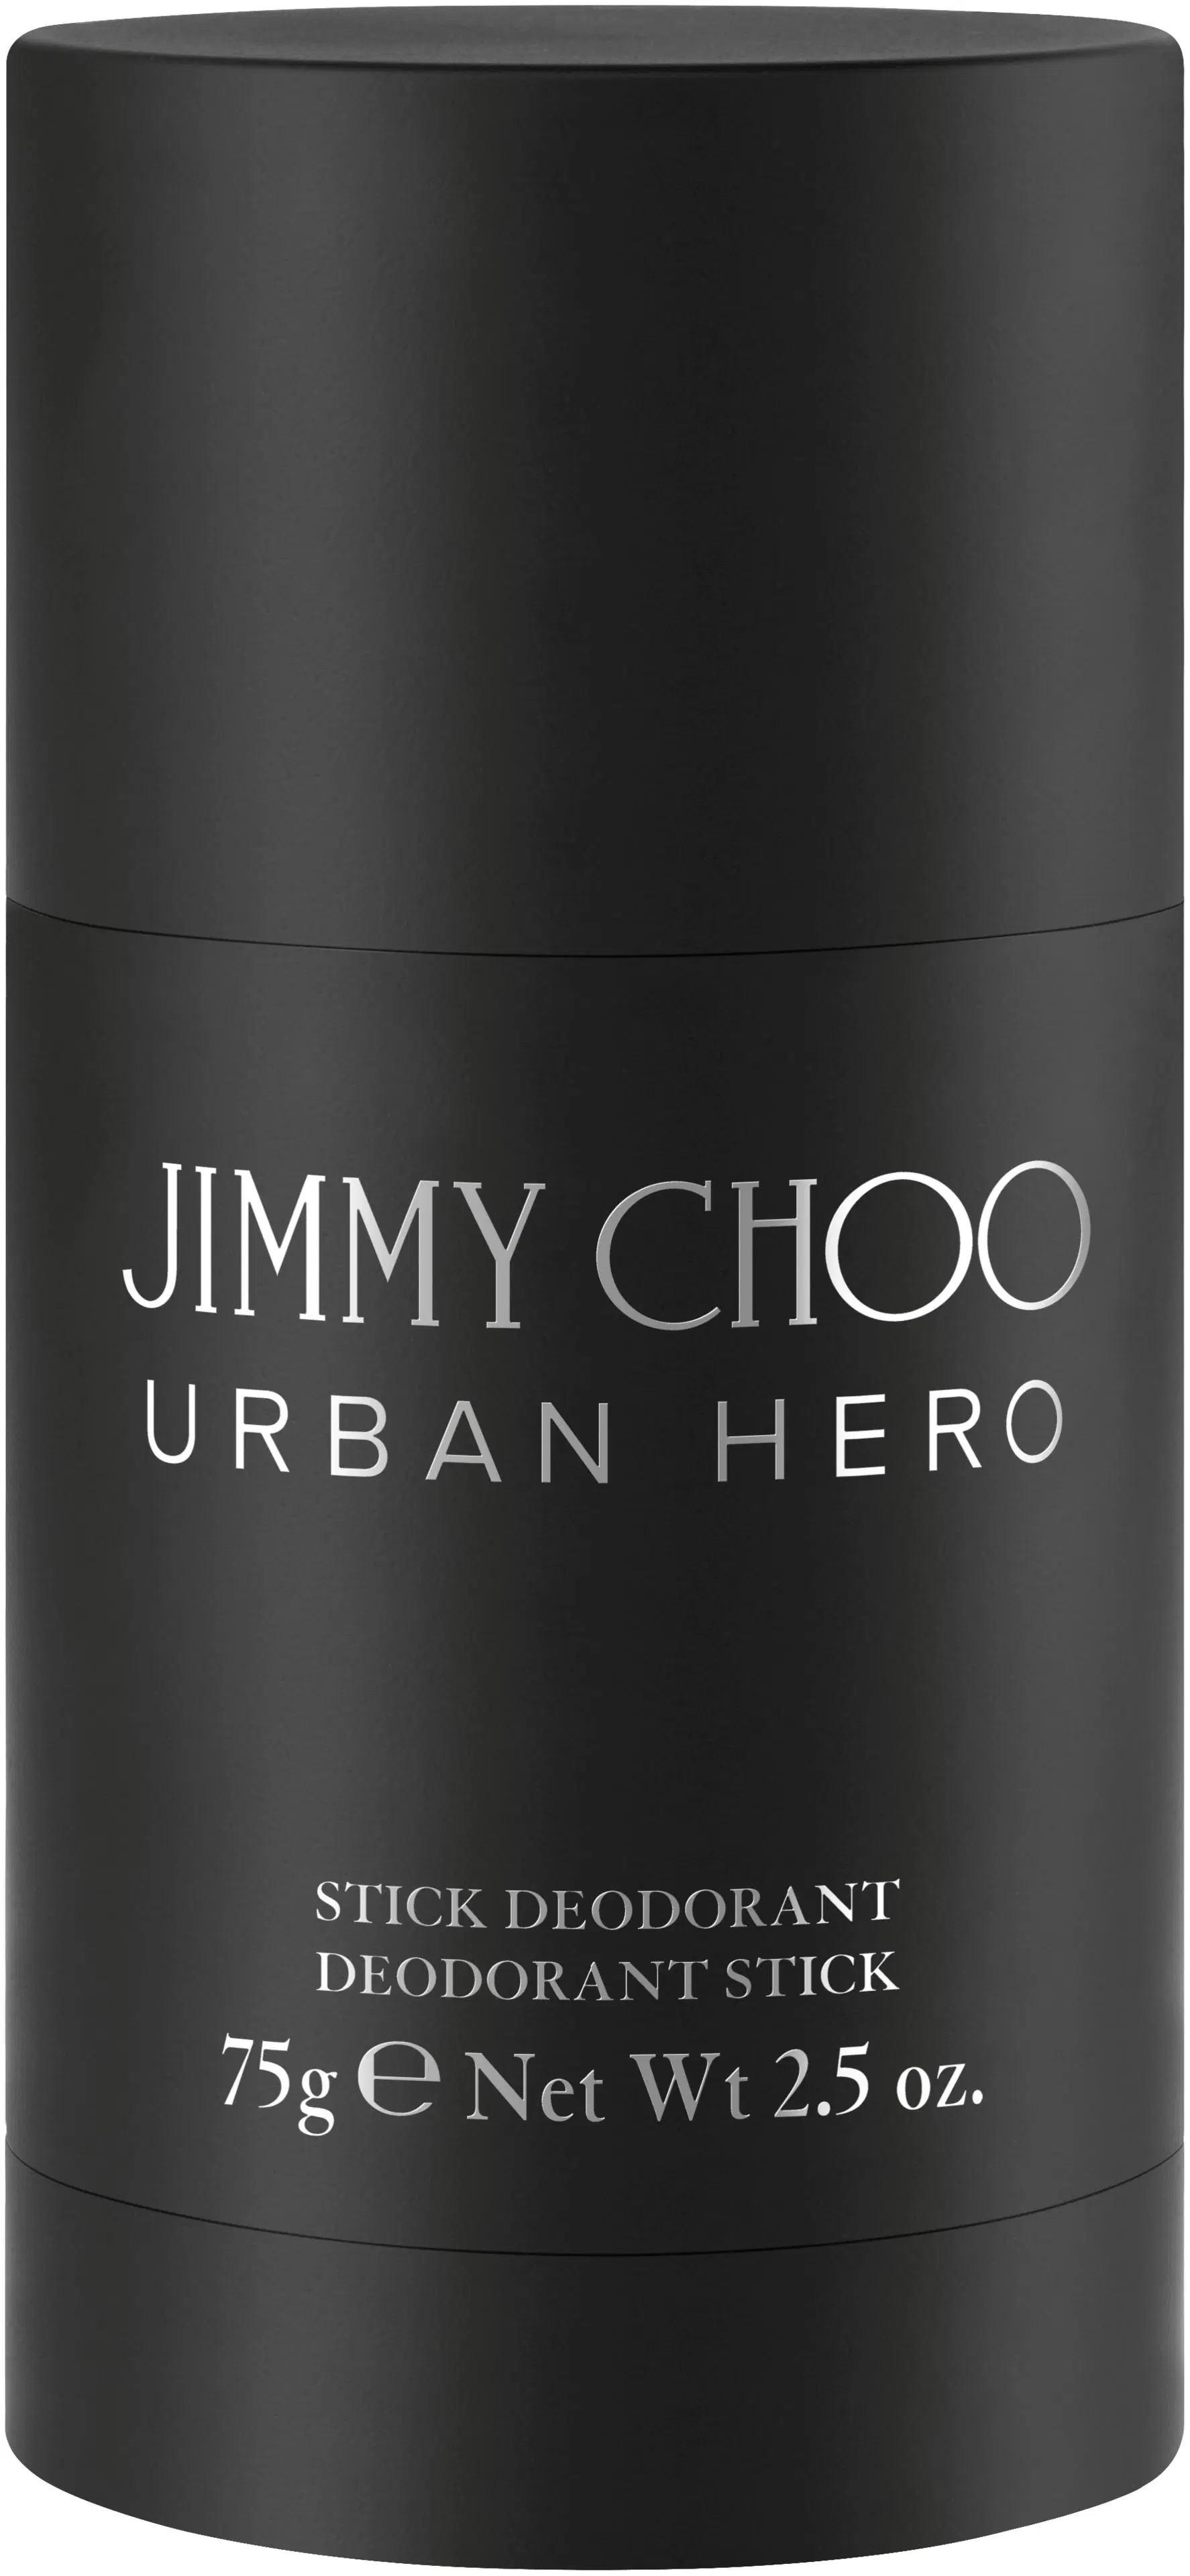 Jimmy Choo Urban Hero deo stick 75g